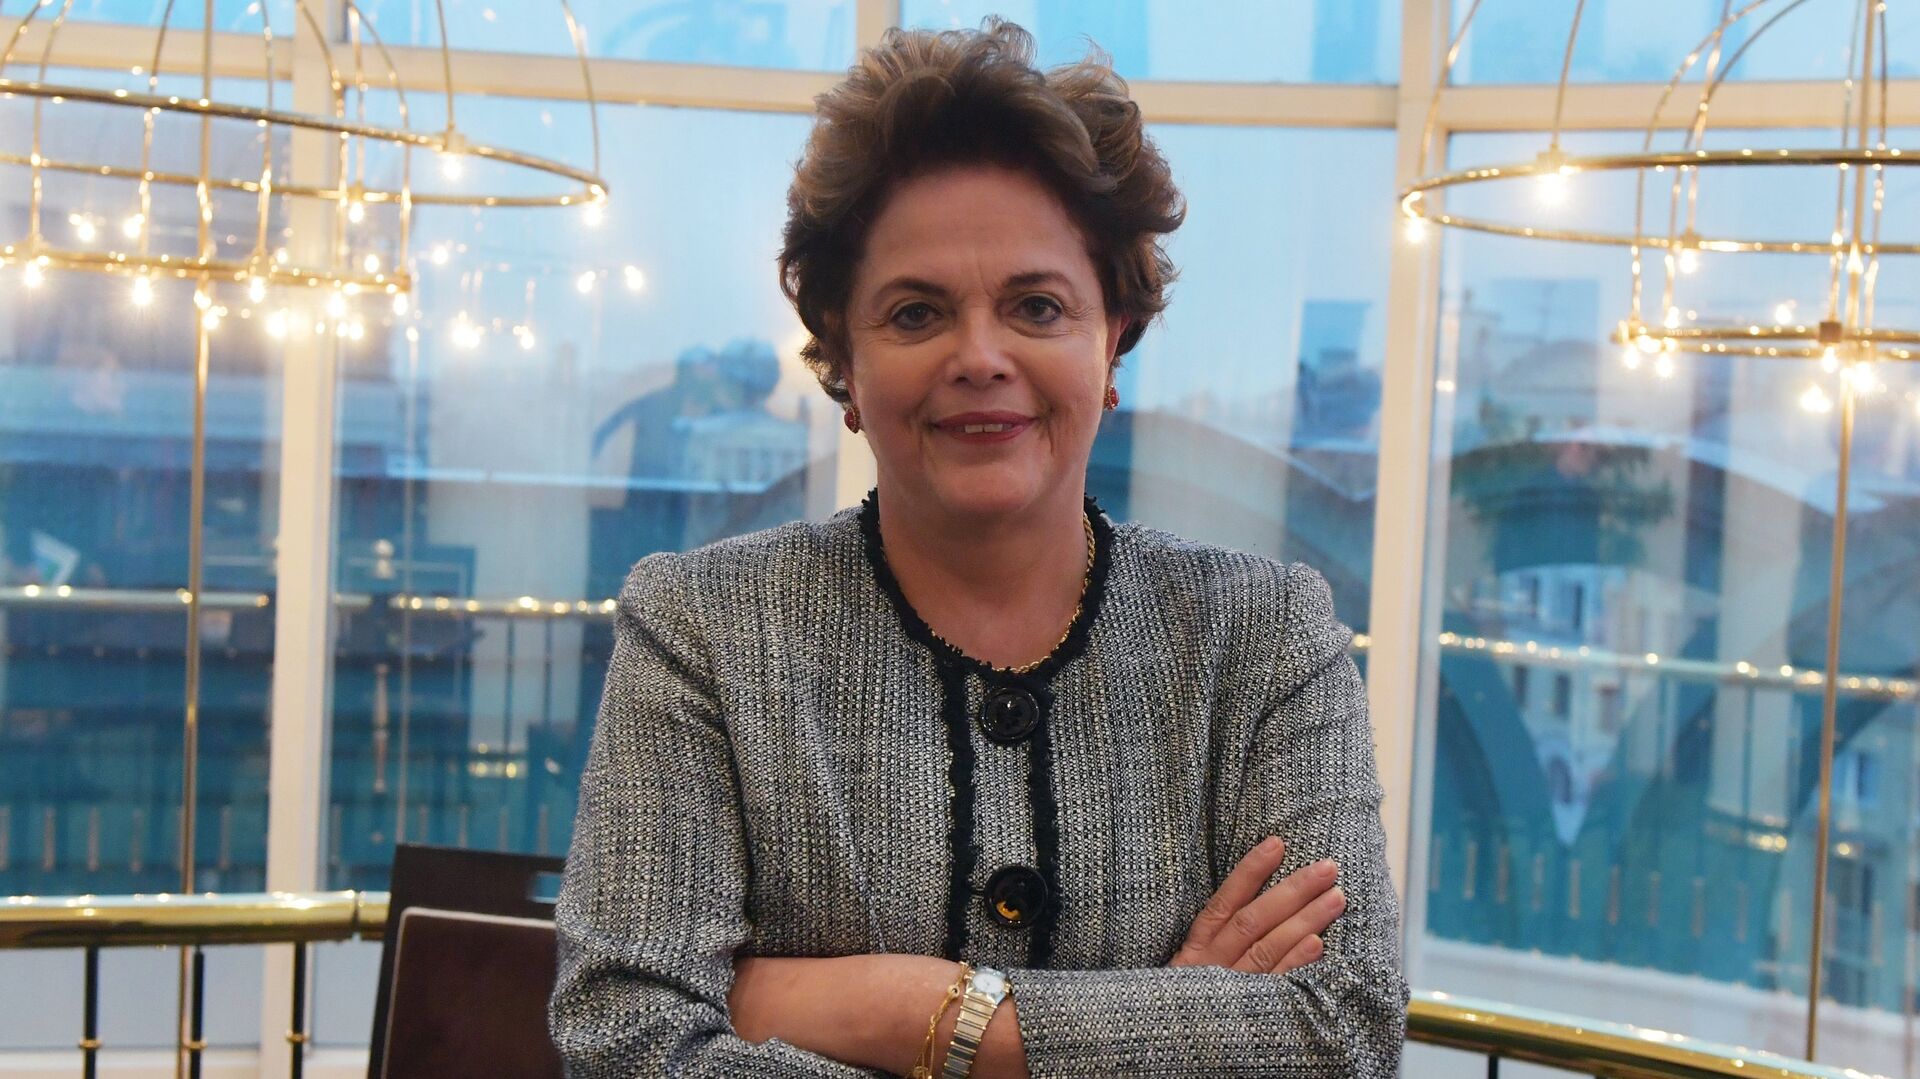 La exmandataria brasileña Dilma Rousseff - Sputnik Mundo, 1920, 01.12.2021